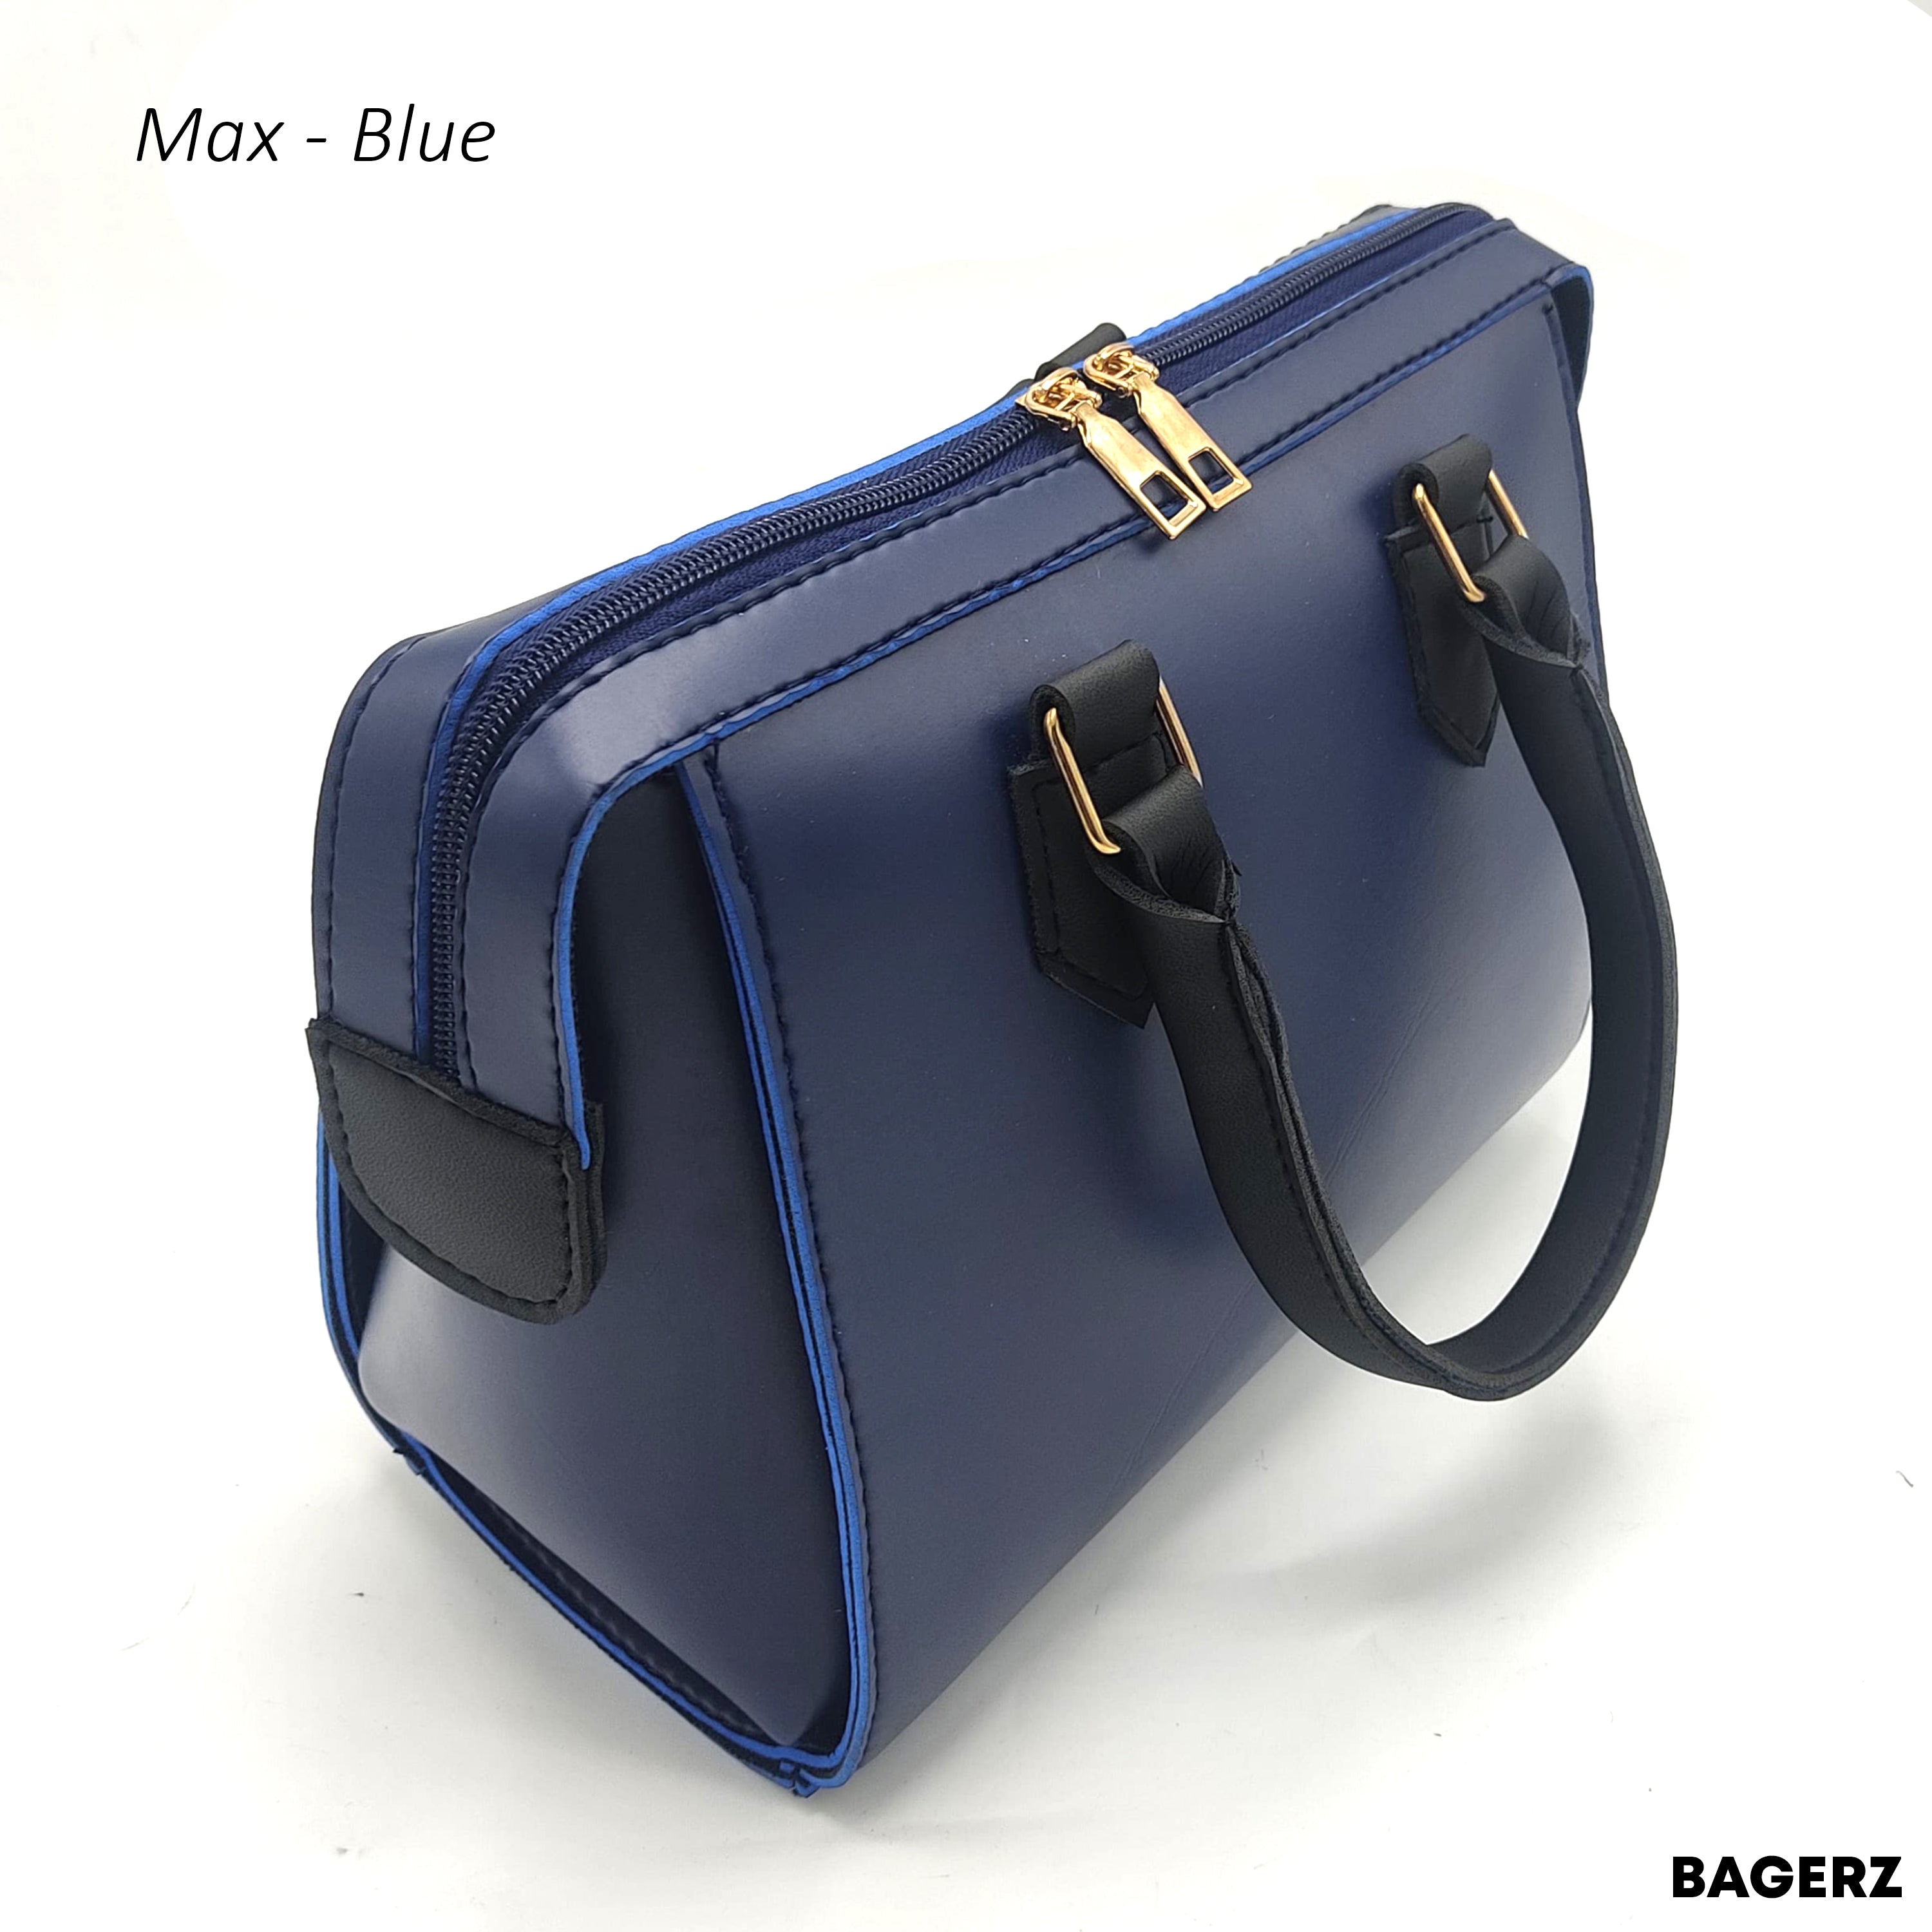 Max - Blue